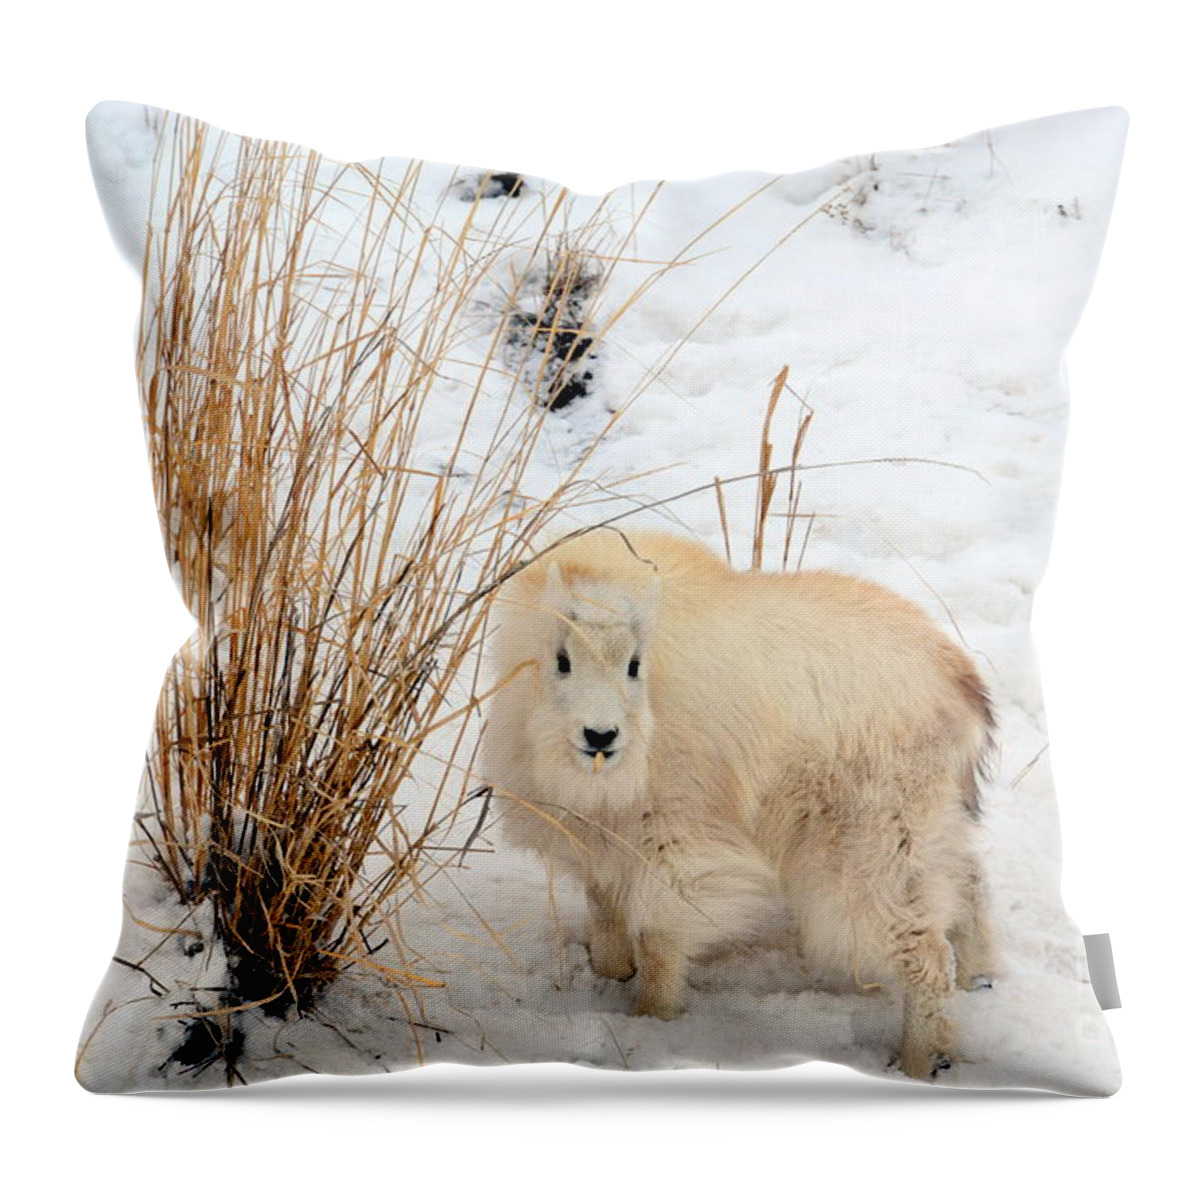 Mountain Goats Throw Pillow featuring the photograph Sweet Little One by Dorrene BrownButterfield